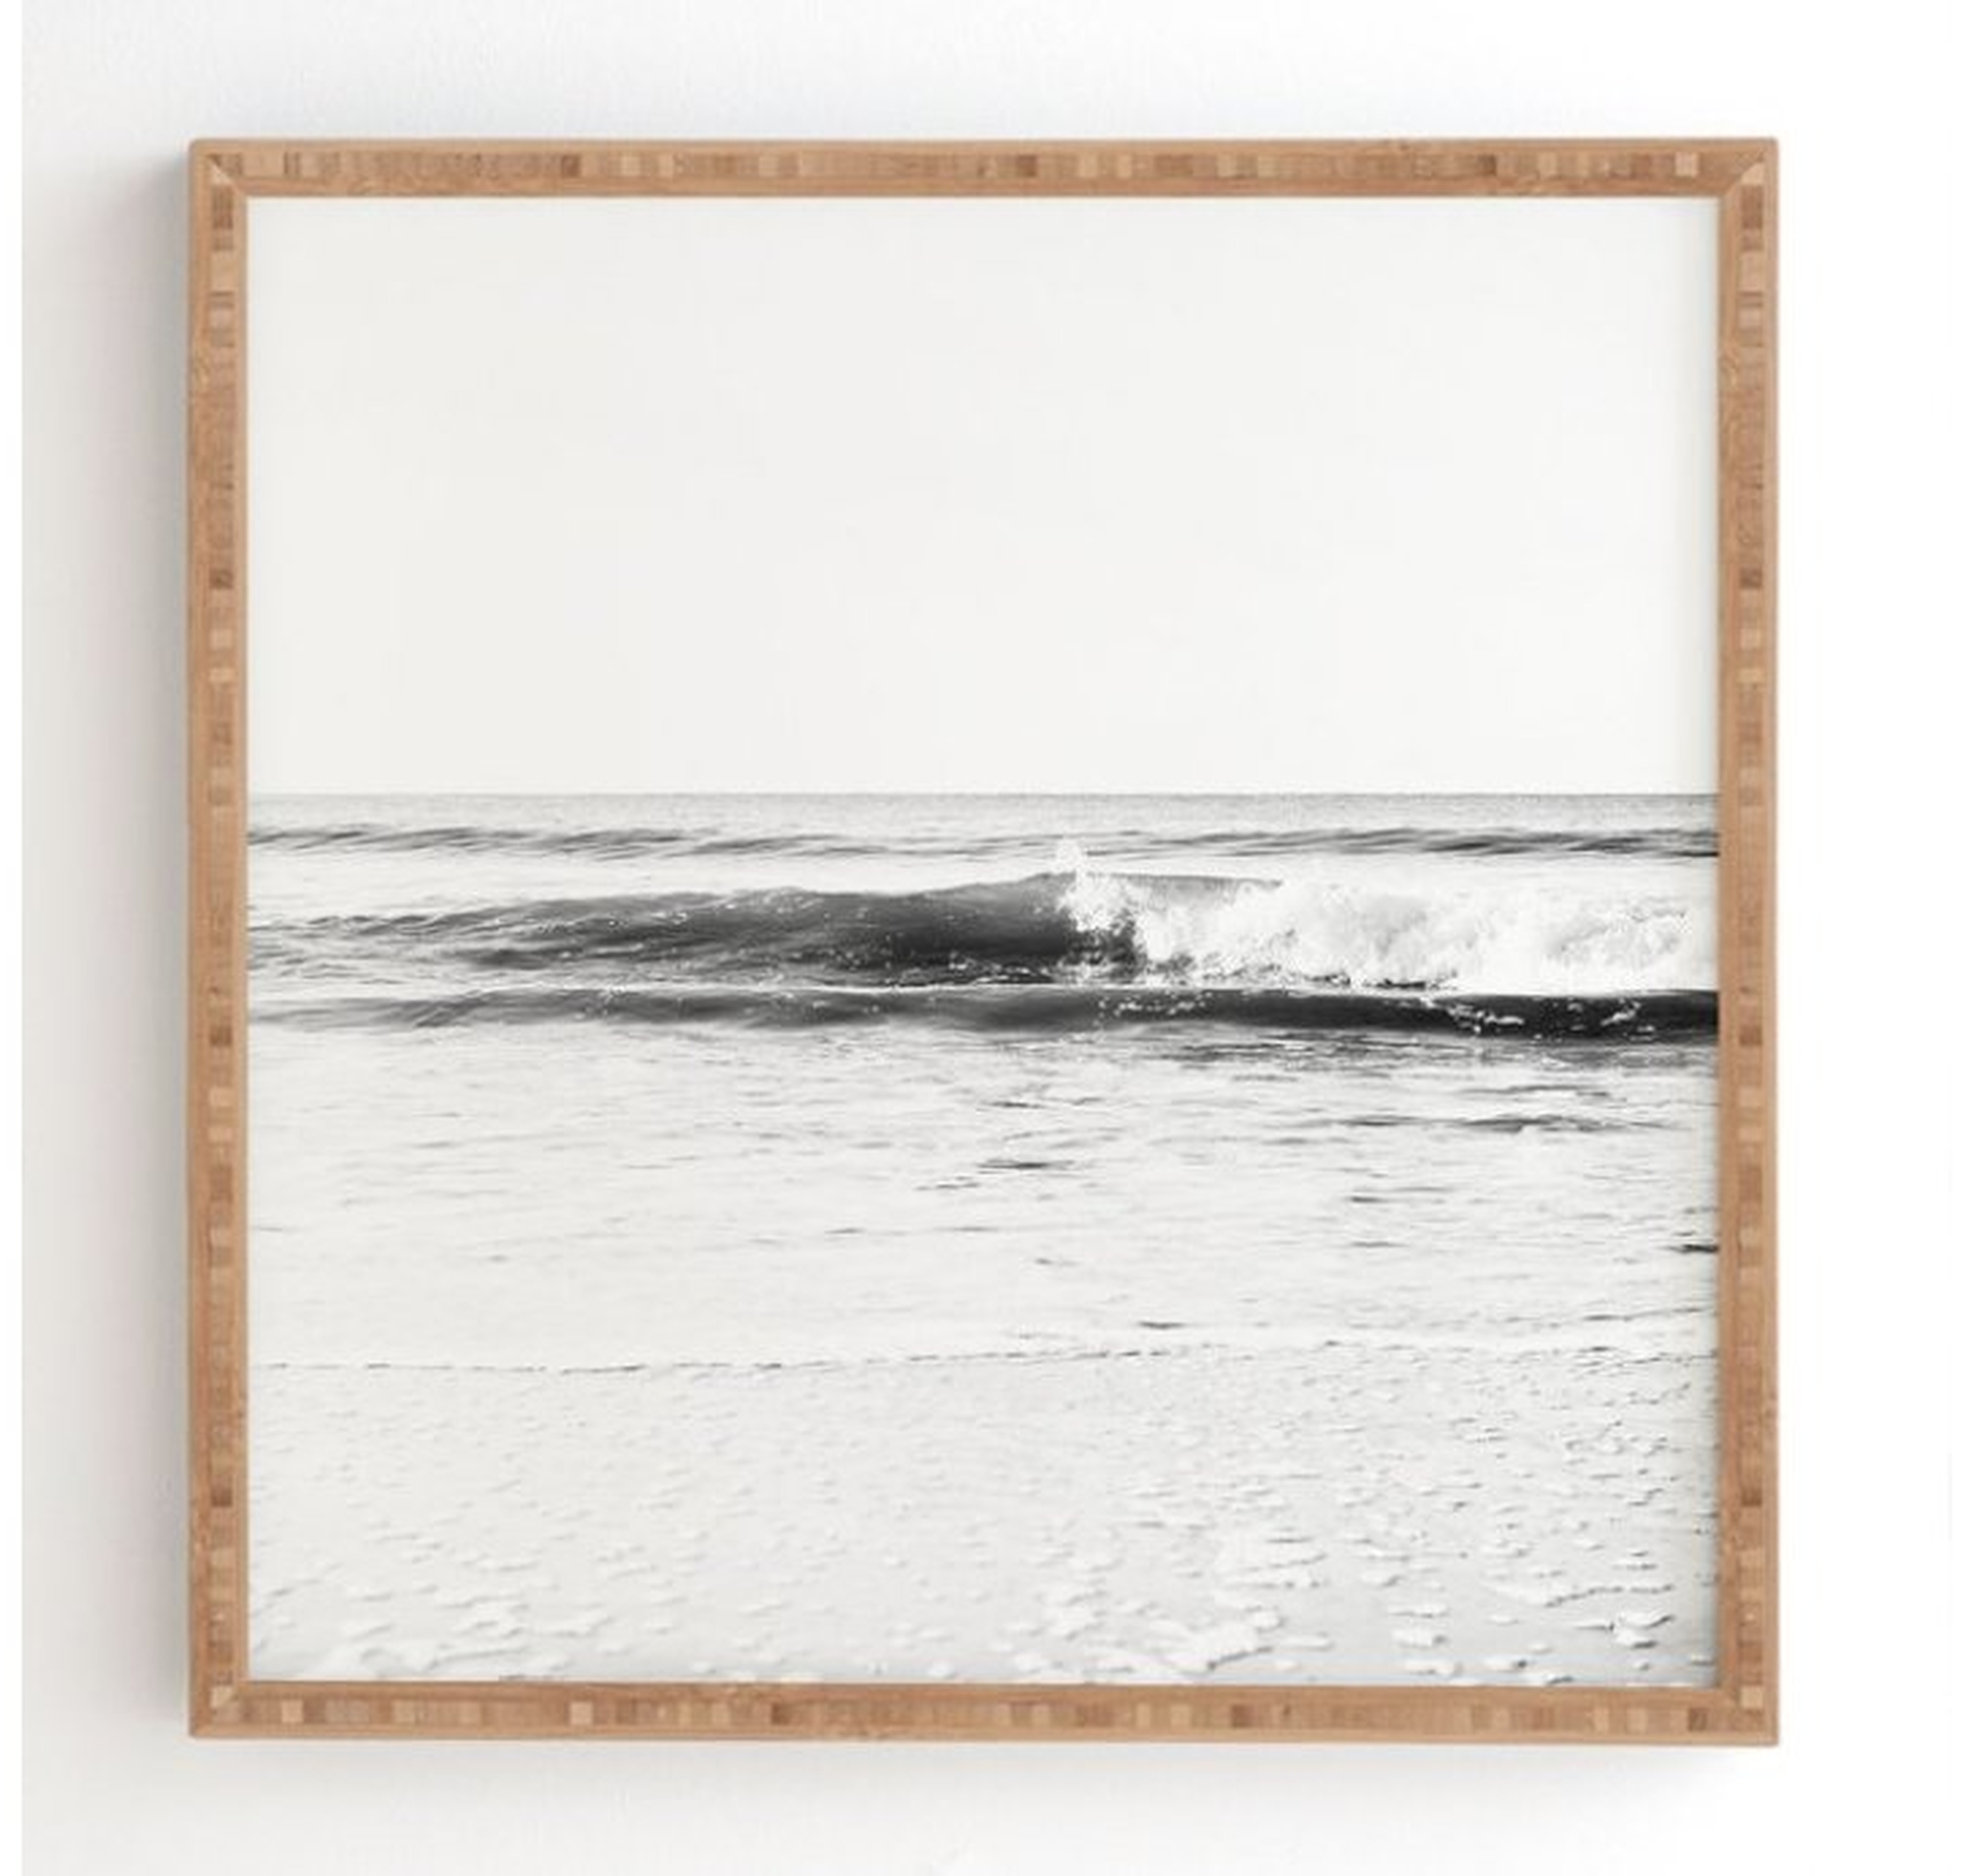 SURF BREAK Framed Wall Art By Bree Madden (21"x21" Framed) - Wander Print Co.